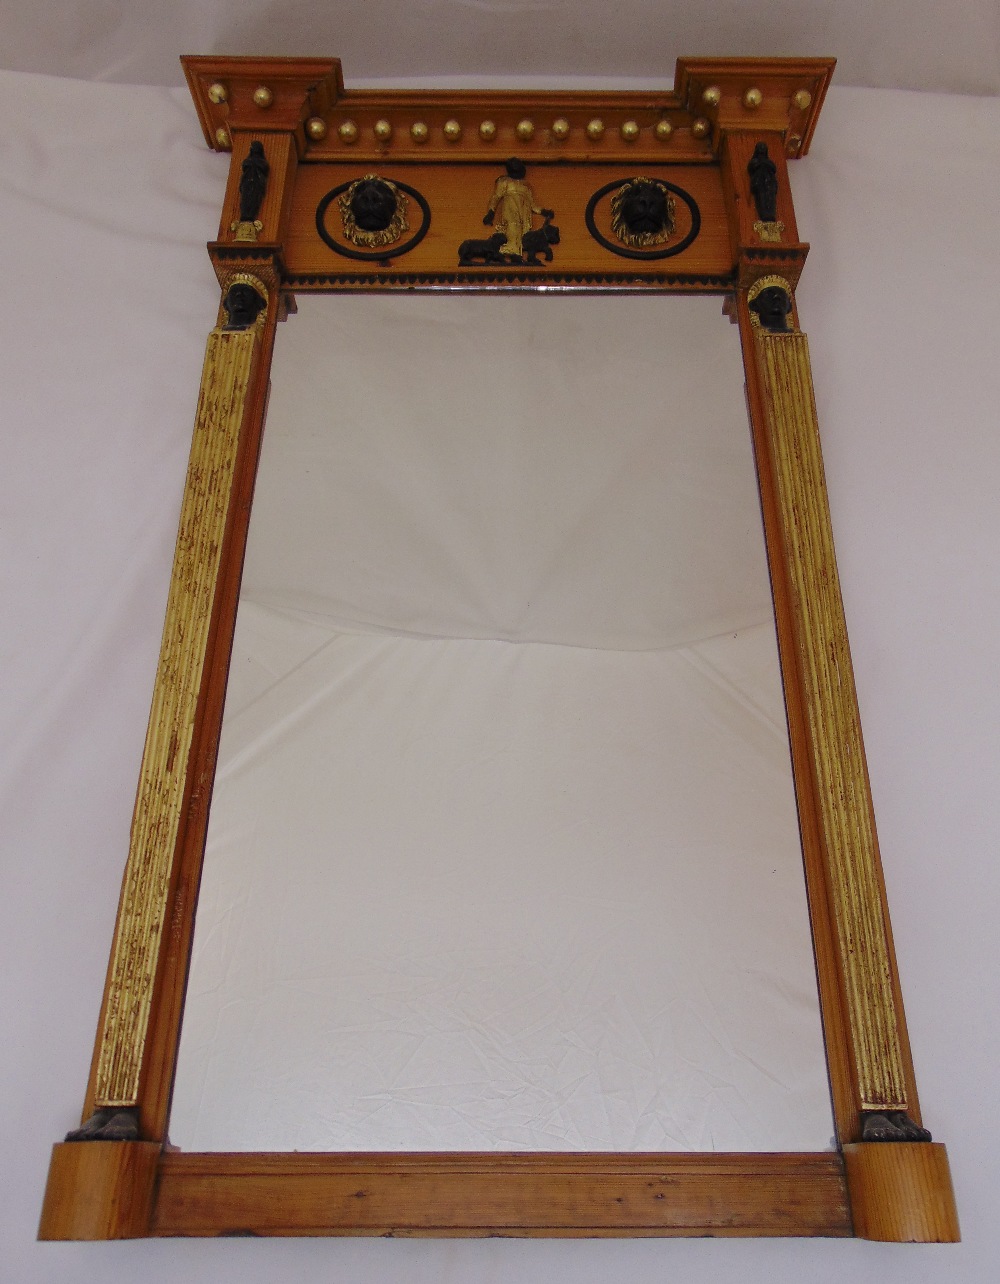 A Regency style rectangular gilded wooden wall mirror, 101.5 x 65 x 10.5cm